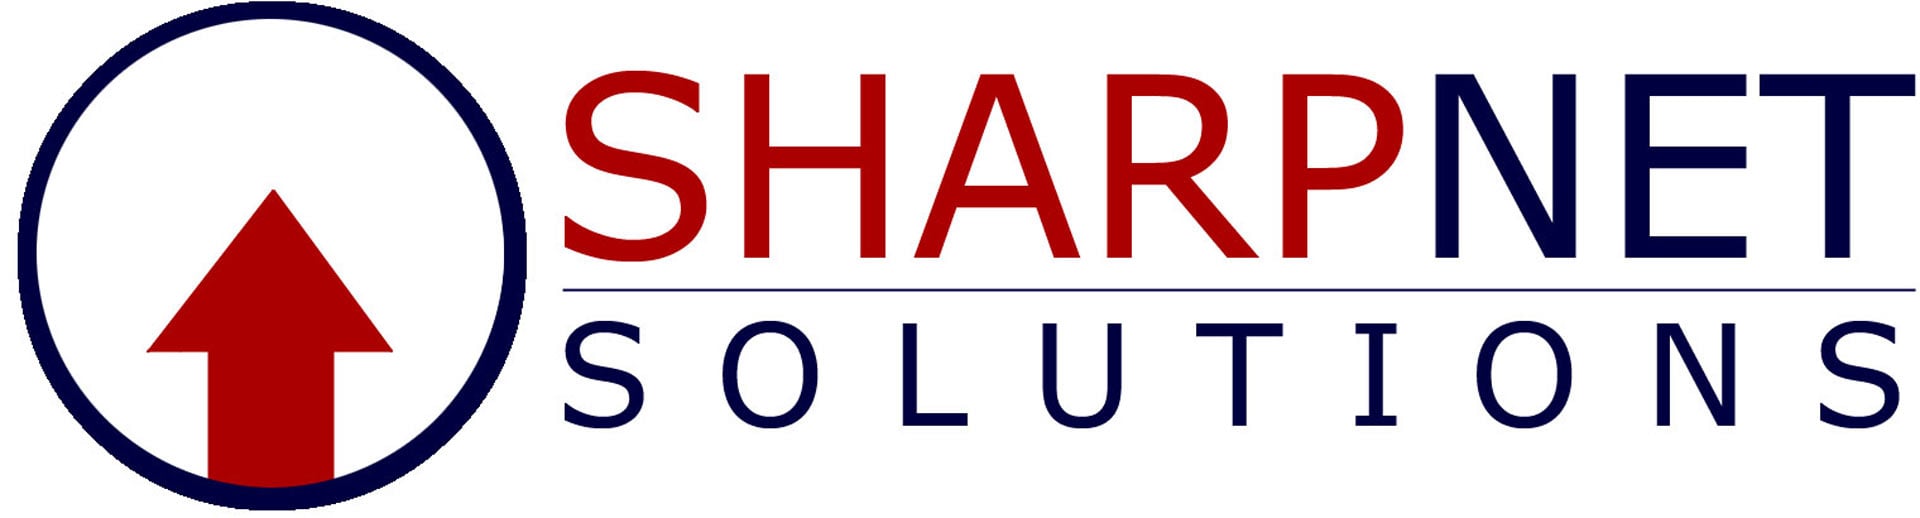 Best Real Estate SEO Firm Logo: SharpNet